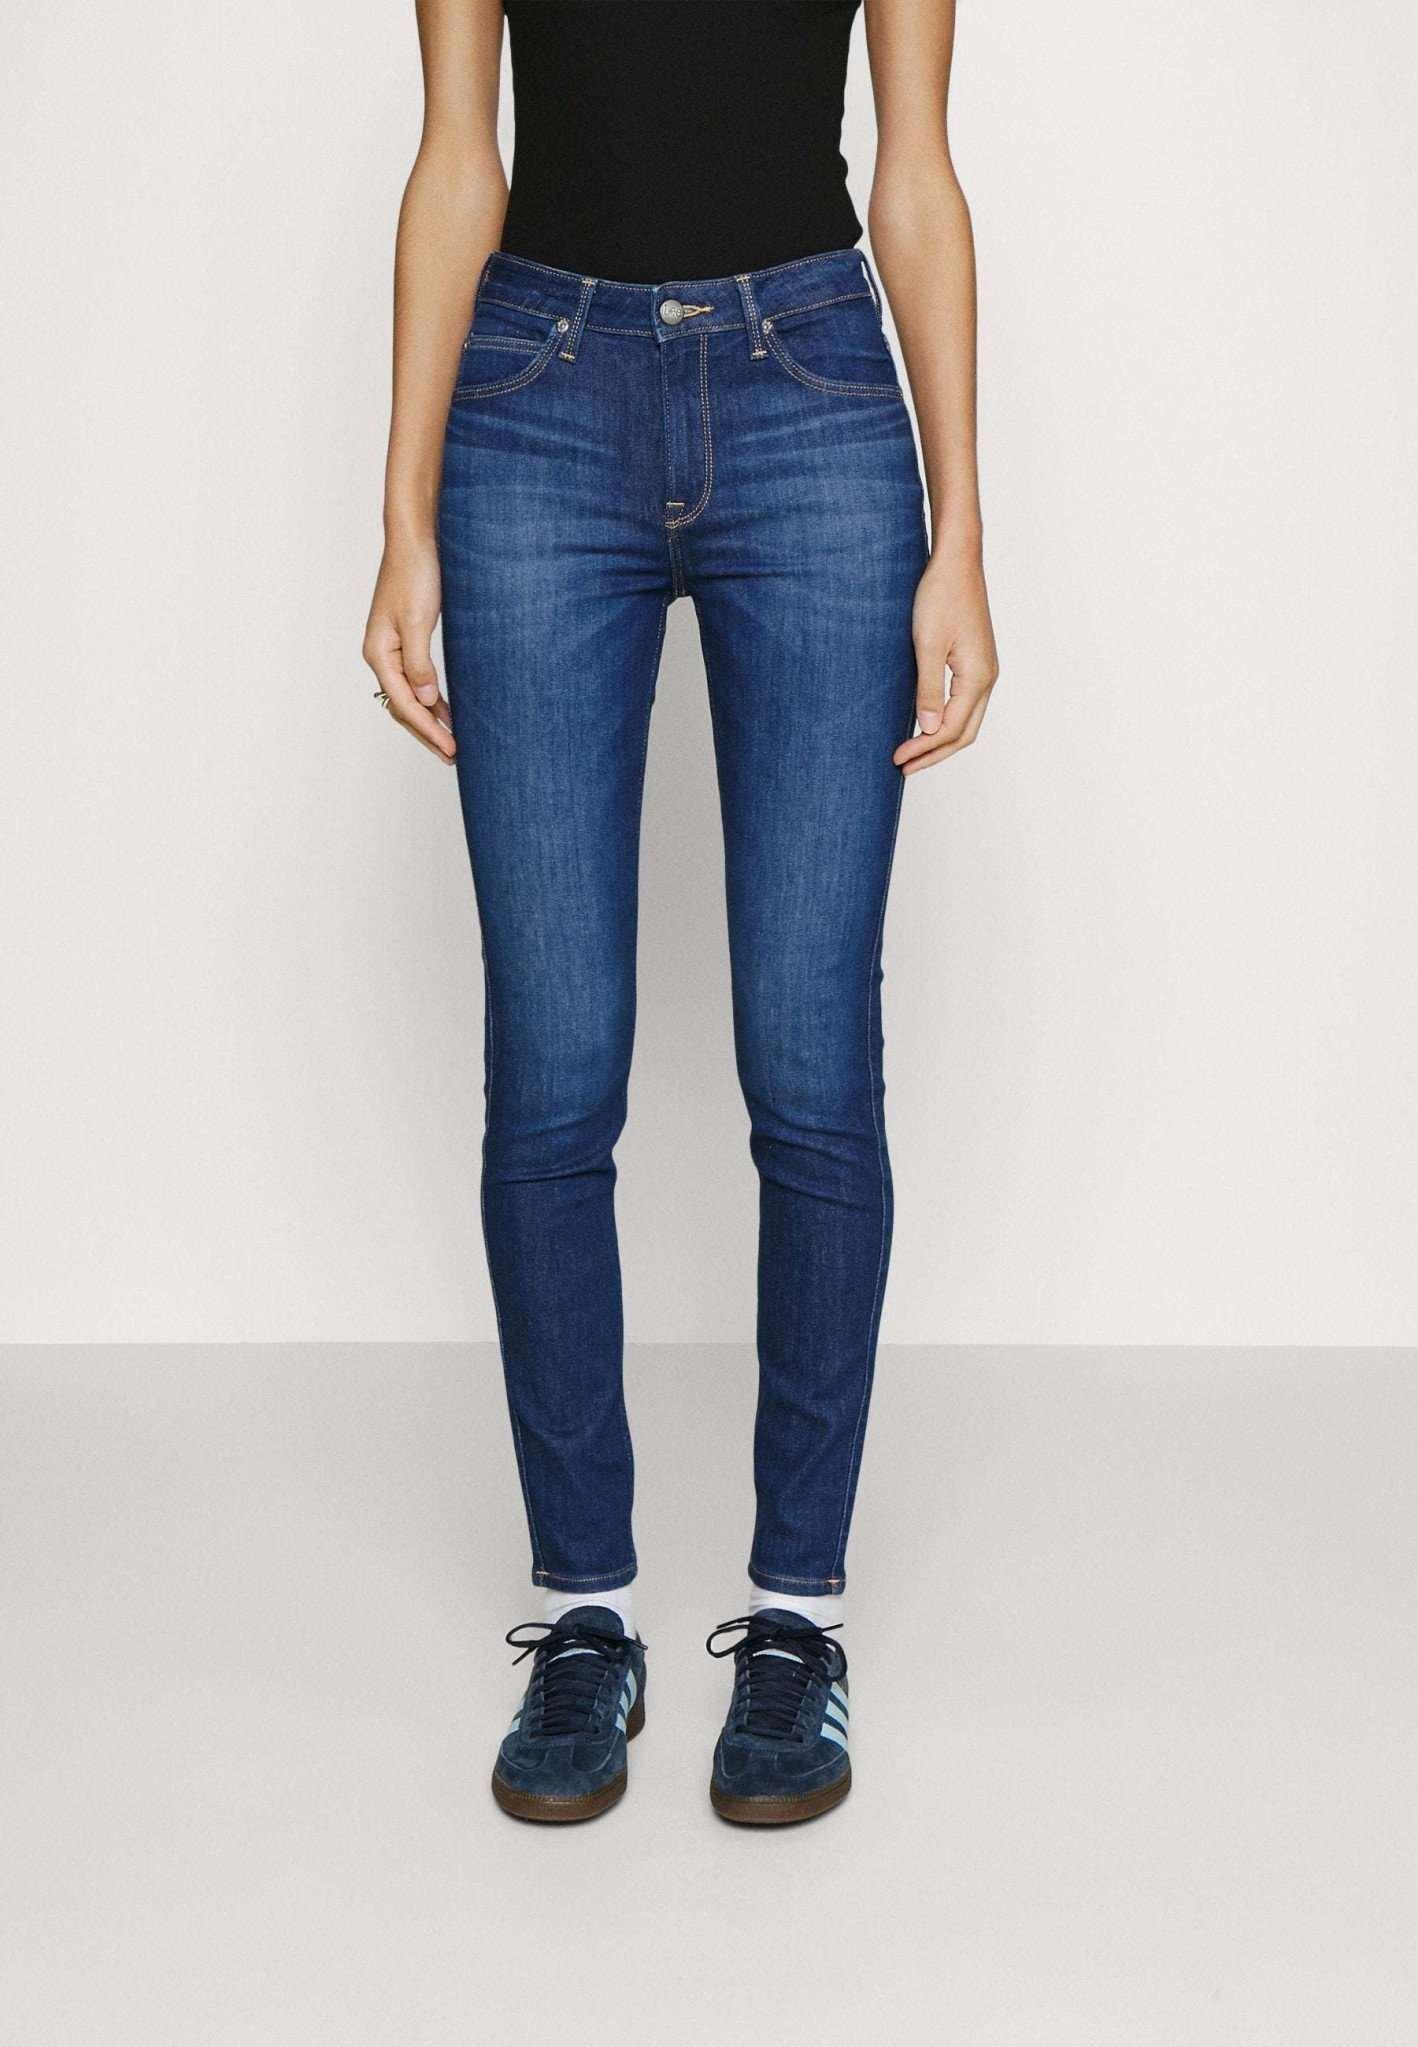 Jeans Skinny Fit Scarlett High Damen Blau L31/W26 von Lee